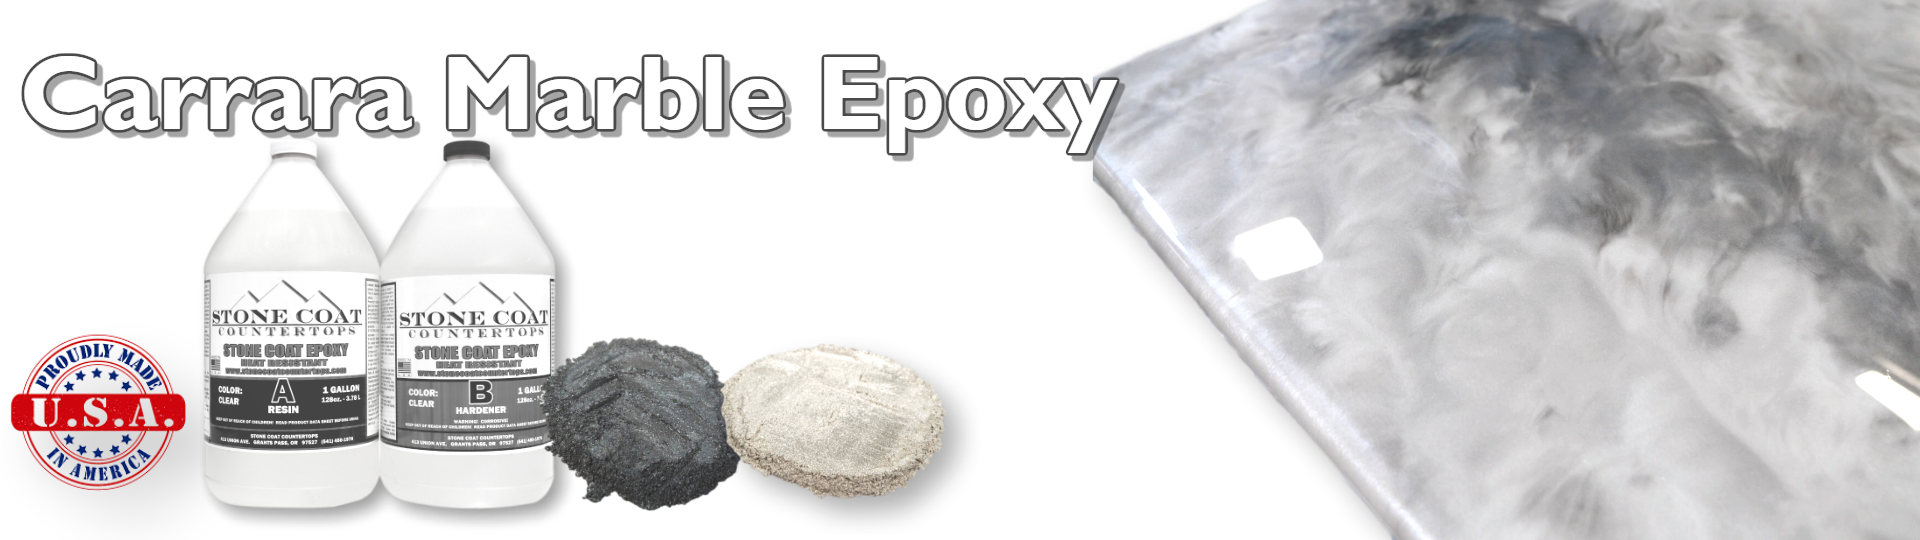 Carrara Marble Epoxy by Stone Coat Countertops, using Stone Coat epoxy A and B.